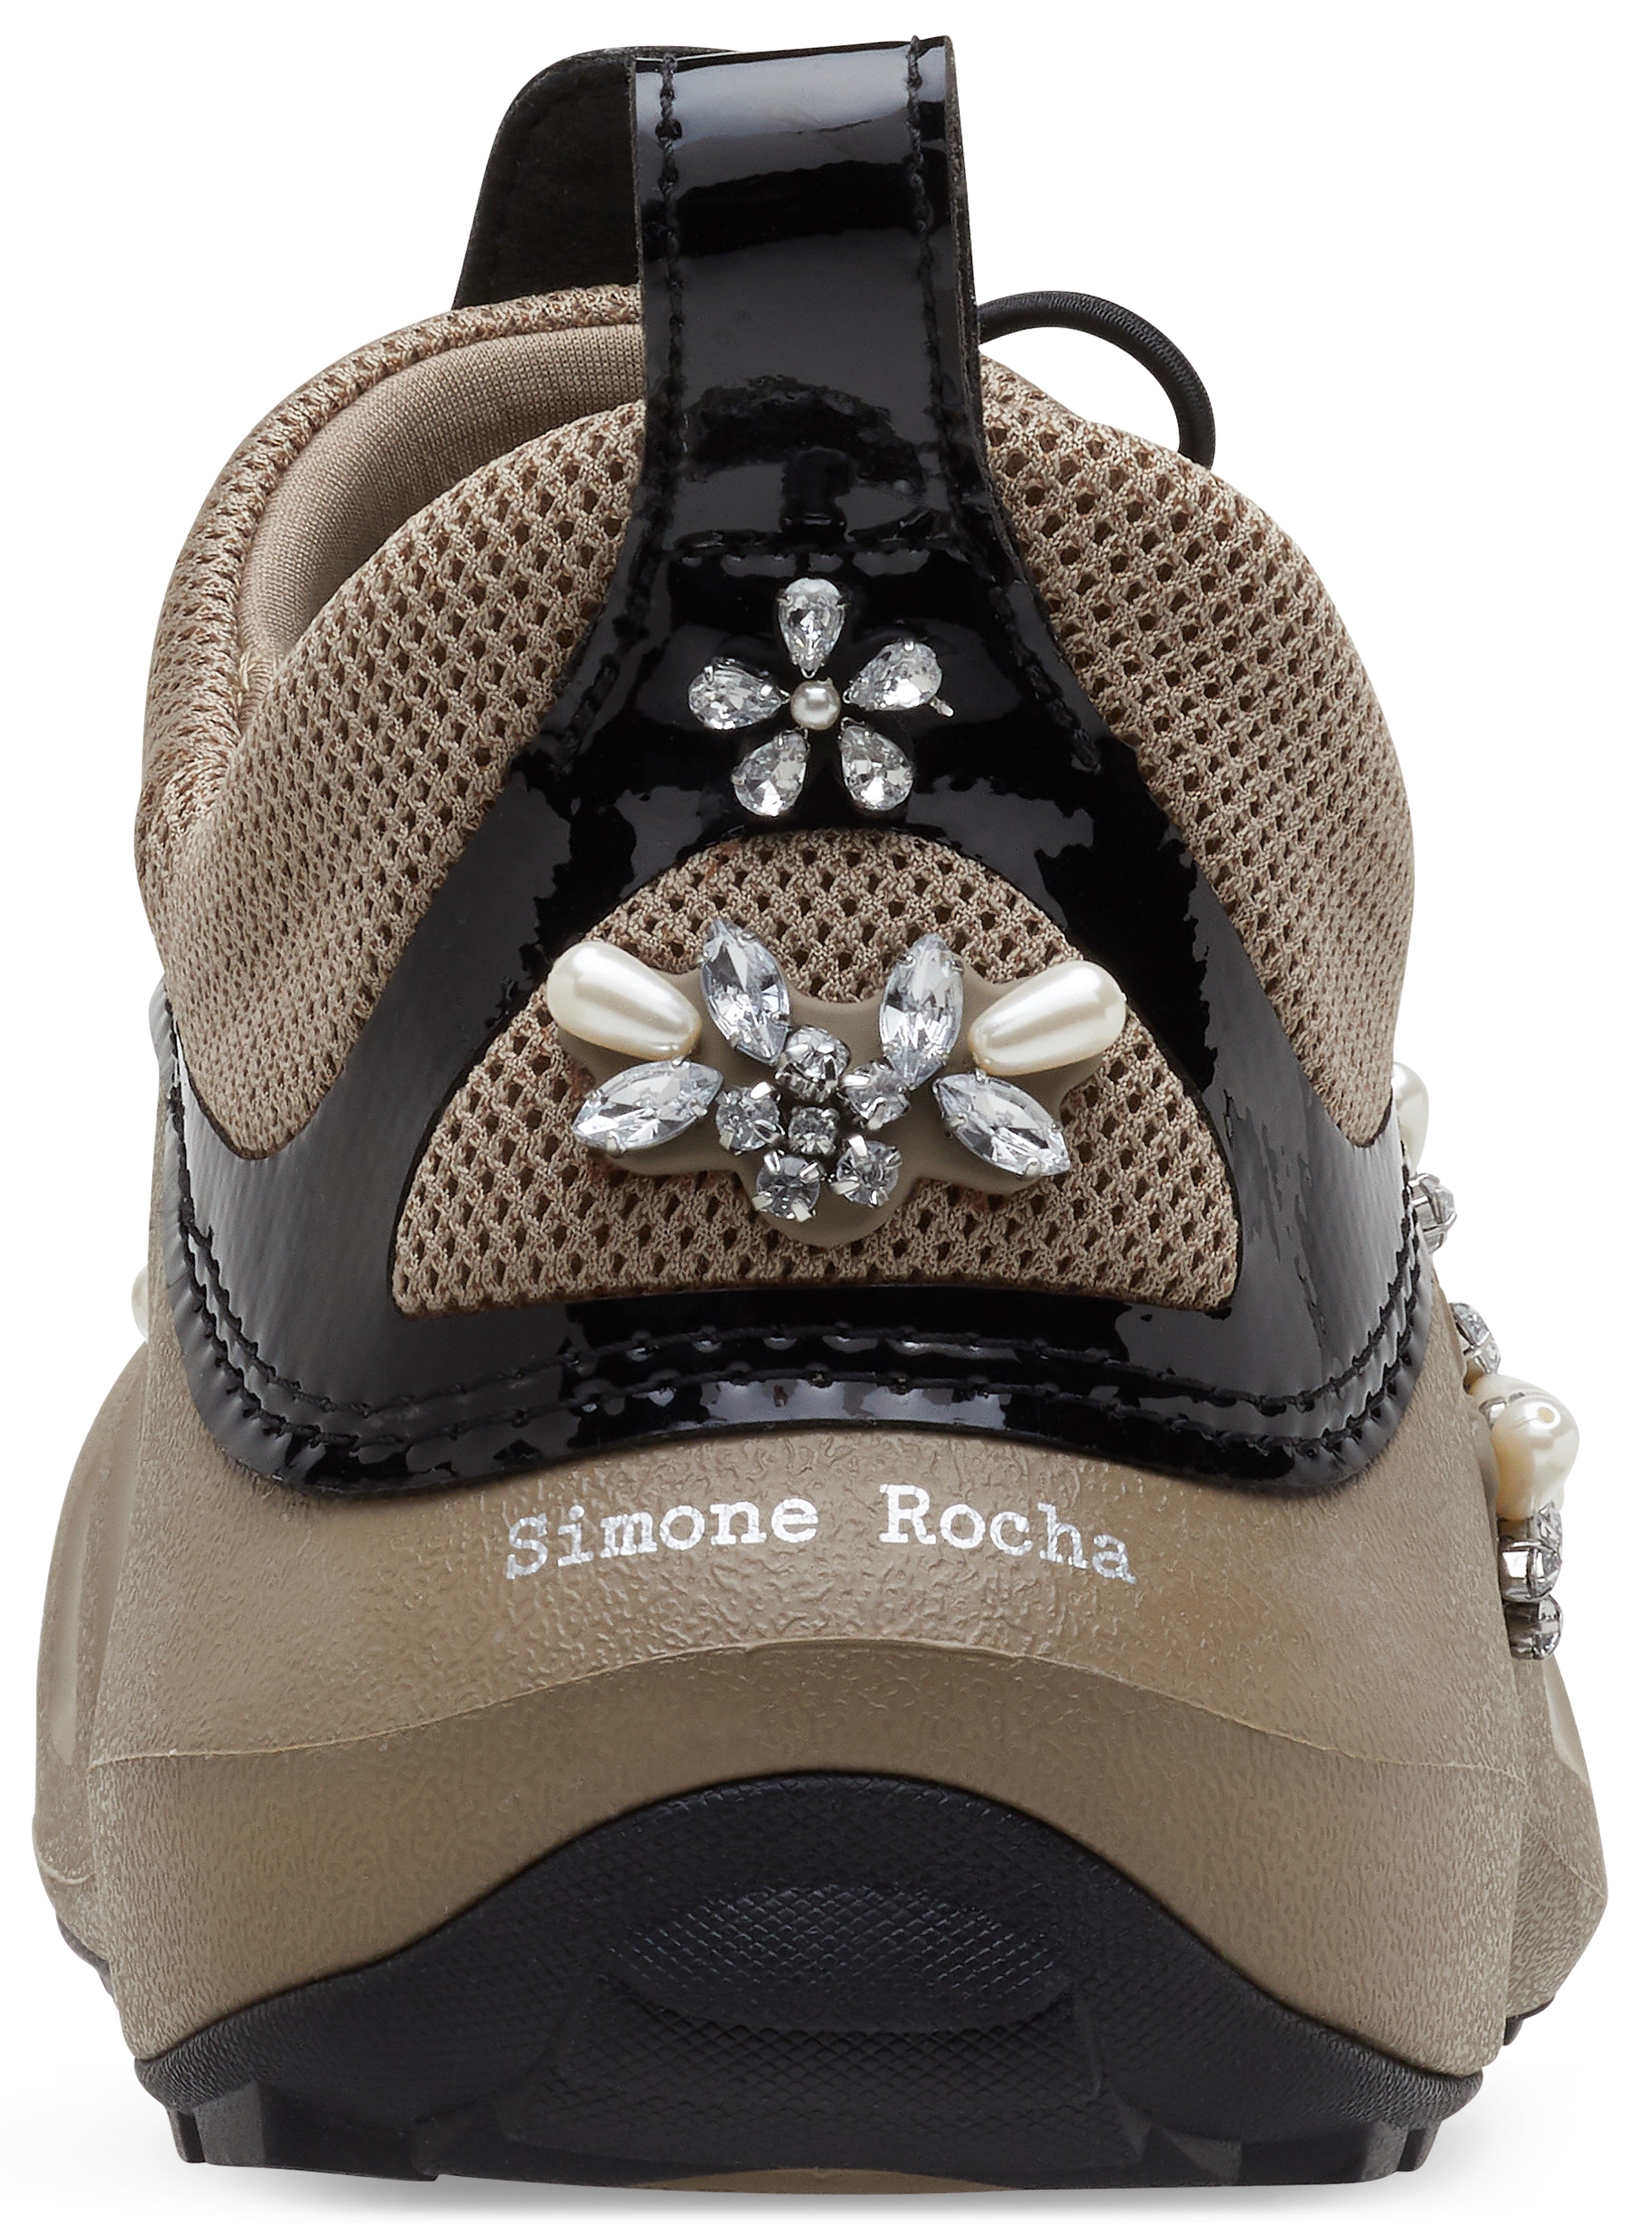 Simone Rocha x Crocs Quick TrailBlack